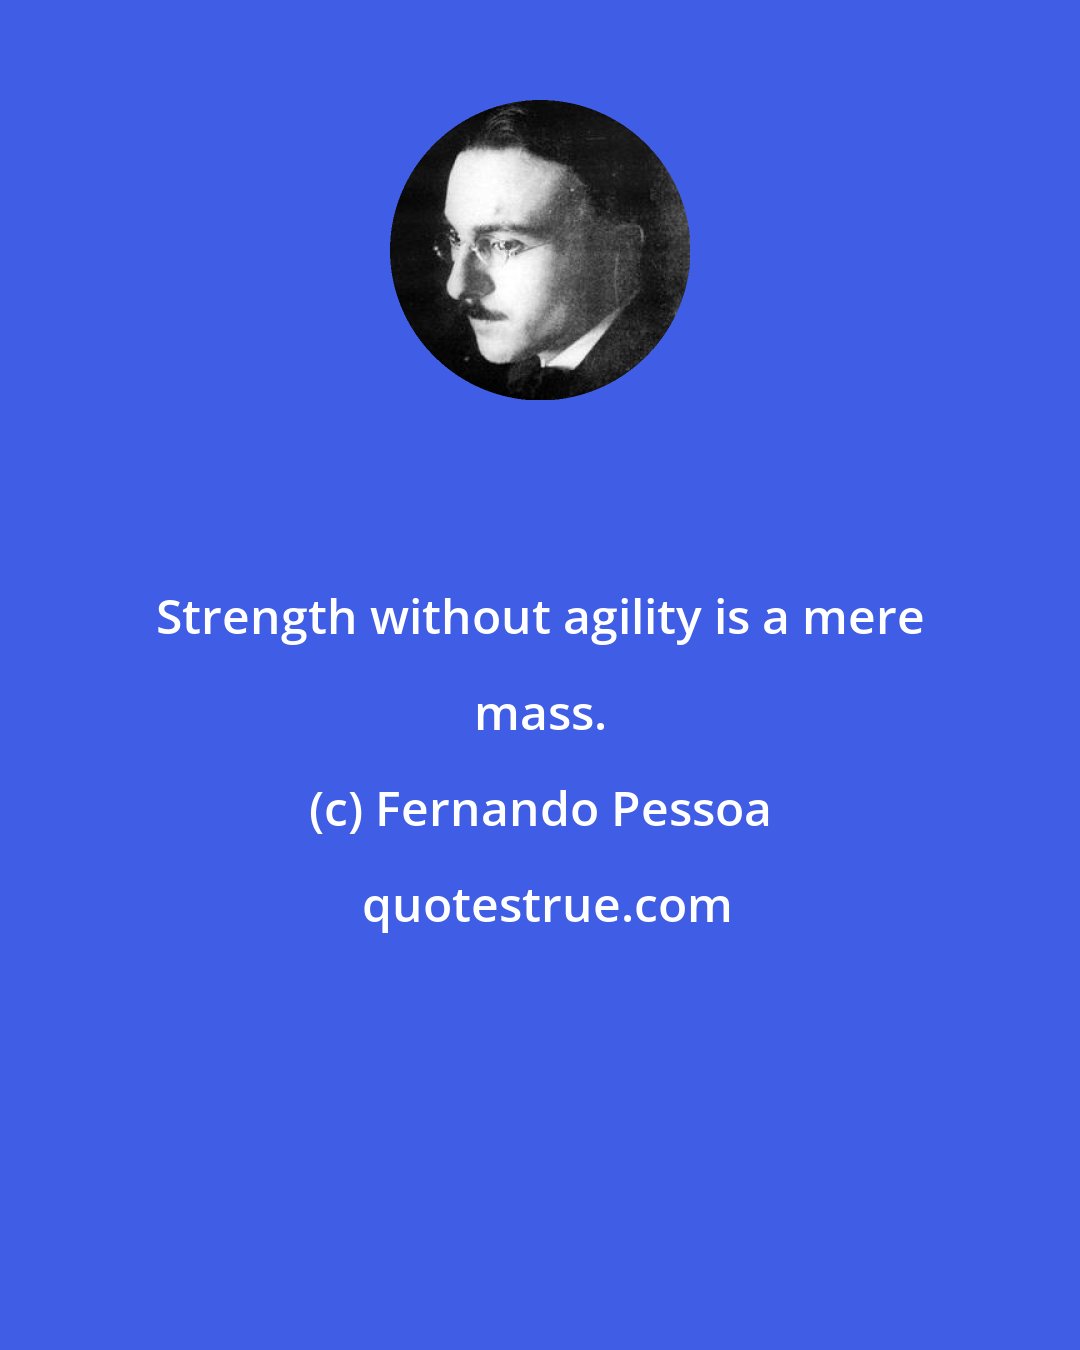 Fernando Pessoa: Strength without agility is a mere mass.